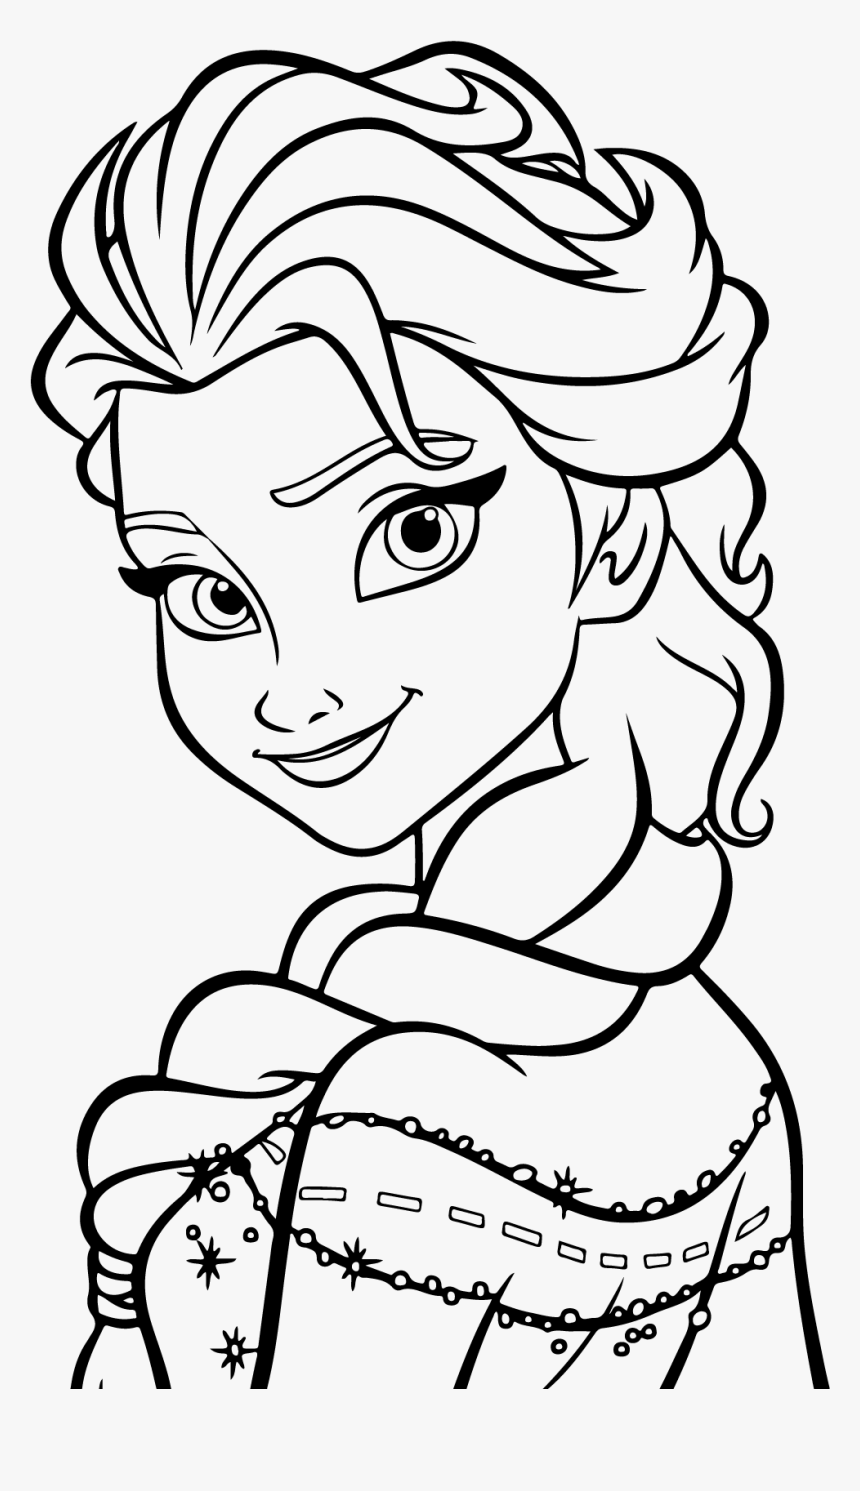 Disney Princess Frozen Elsa Coloring Page Printable ...